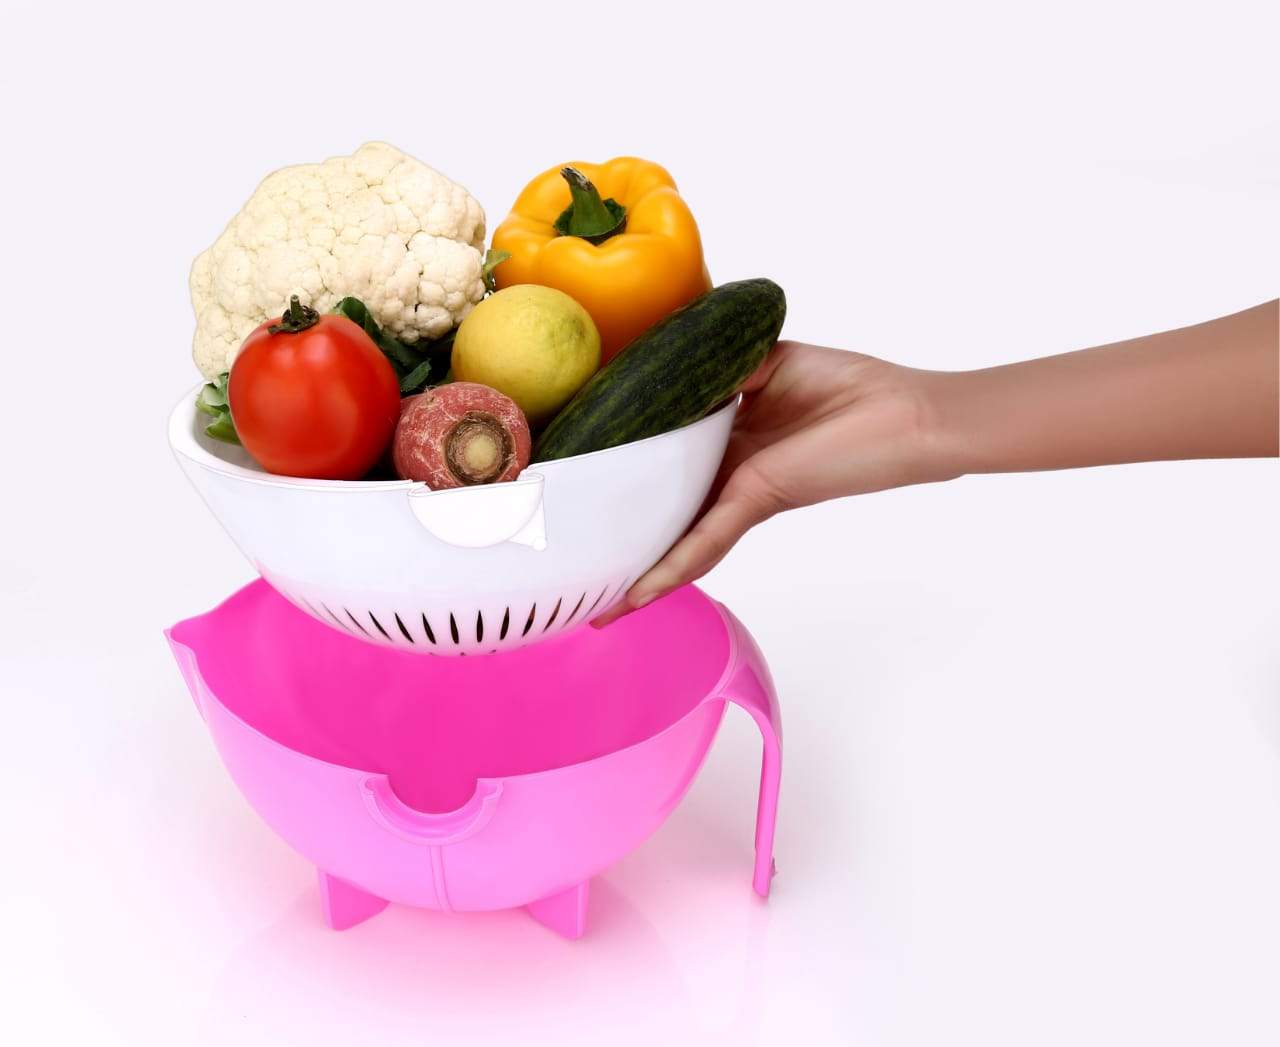 2214 Multifunctional Vegetable Fruits Cutter Shredder with Rotating Drain Basket - SkyShopy